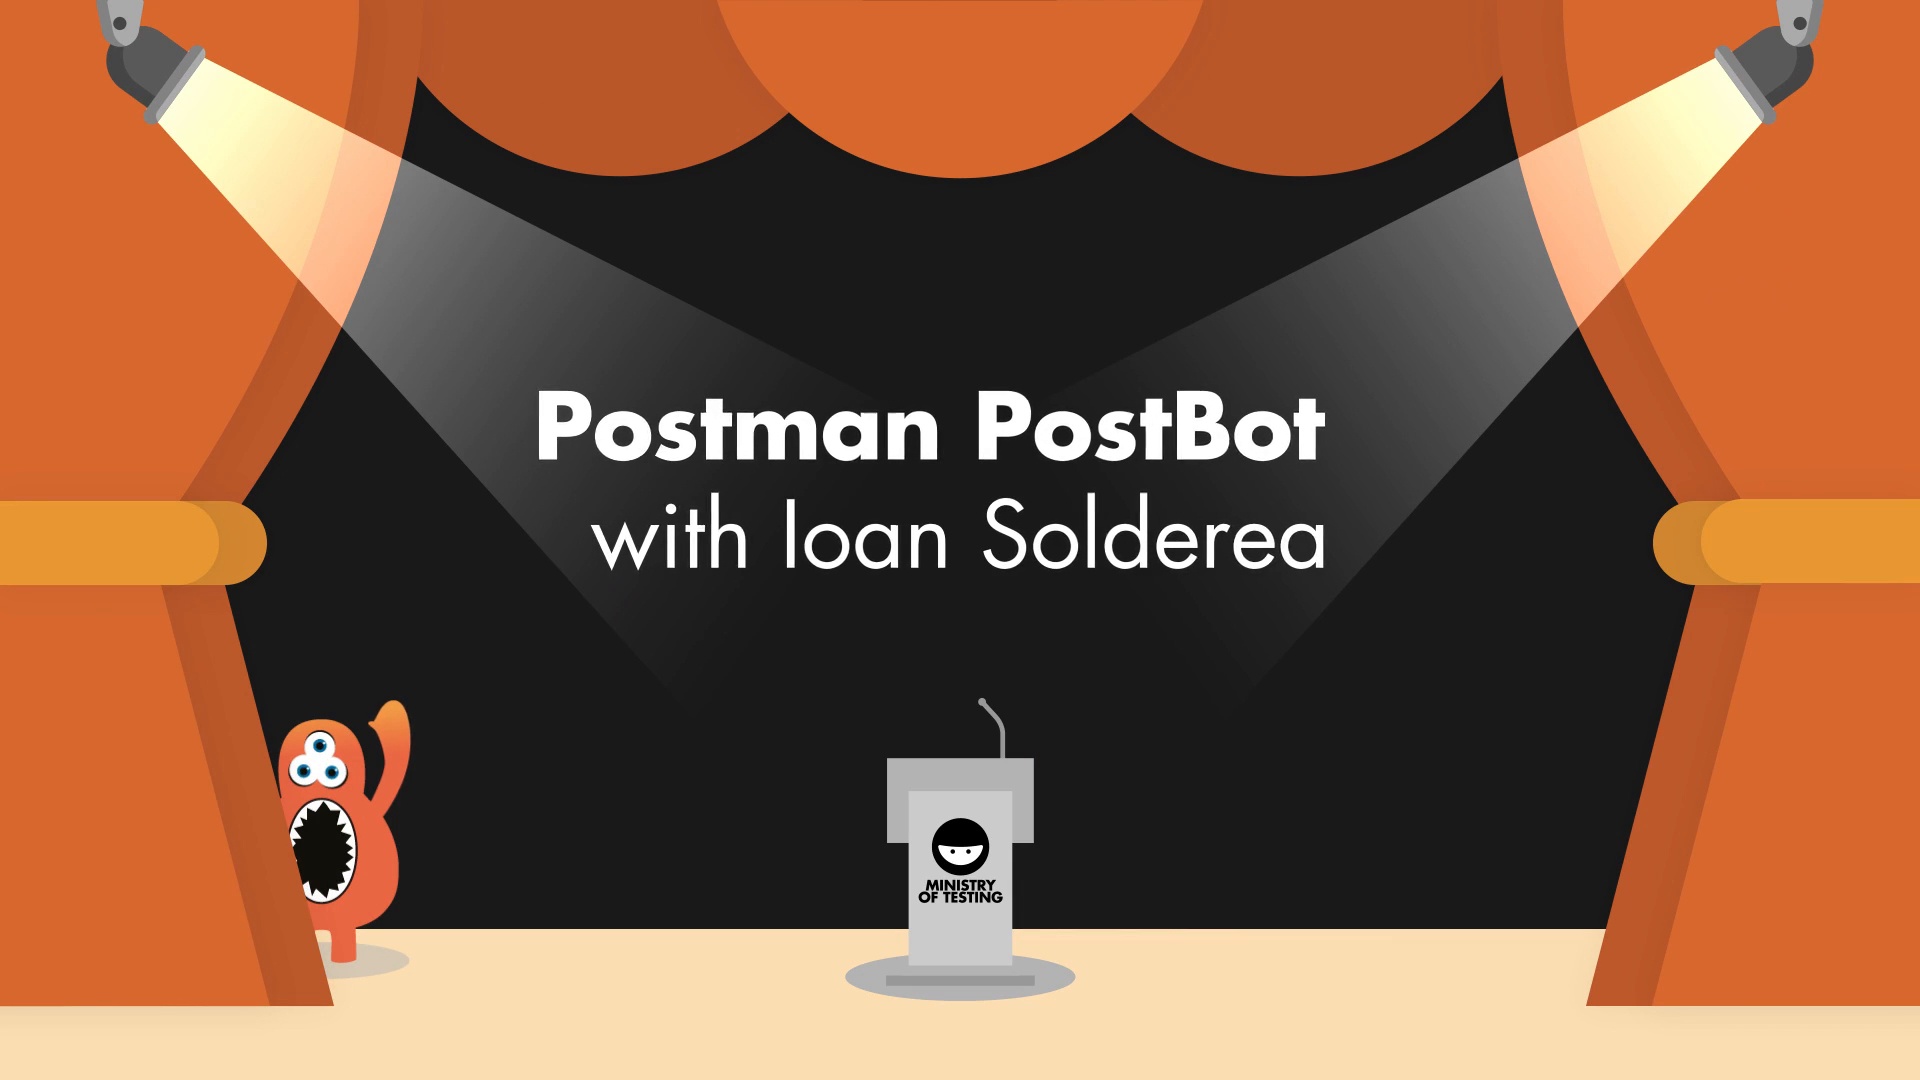 Feature Spotlight: Postman PostBot